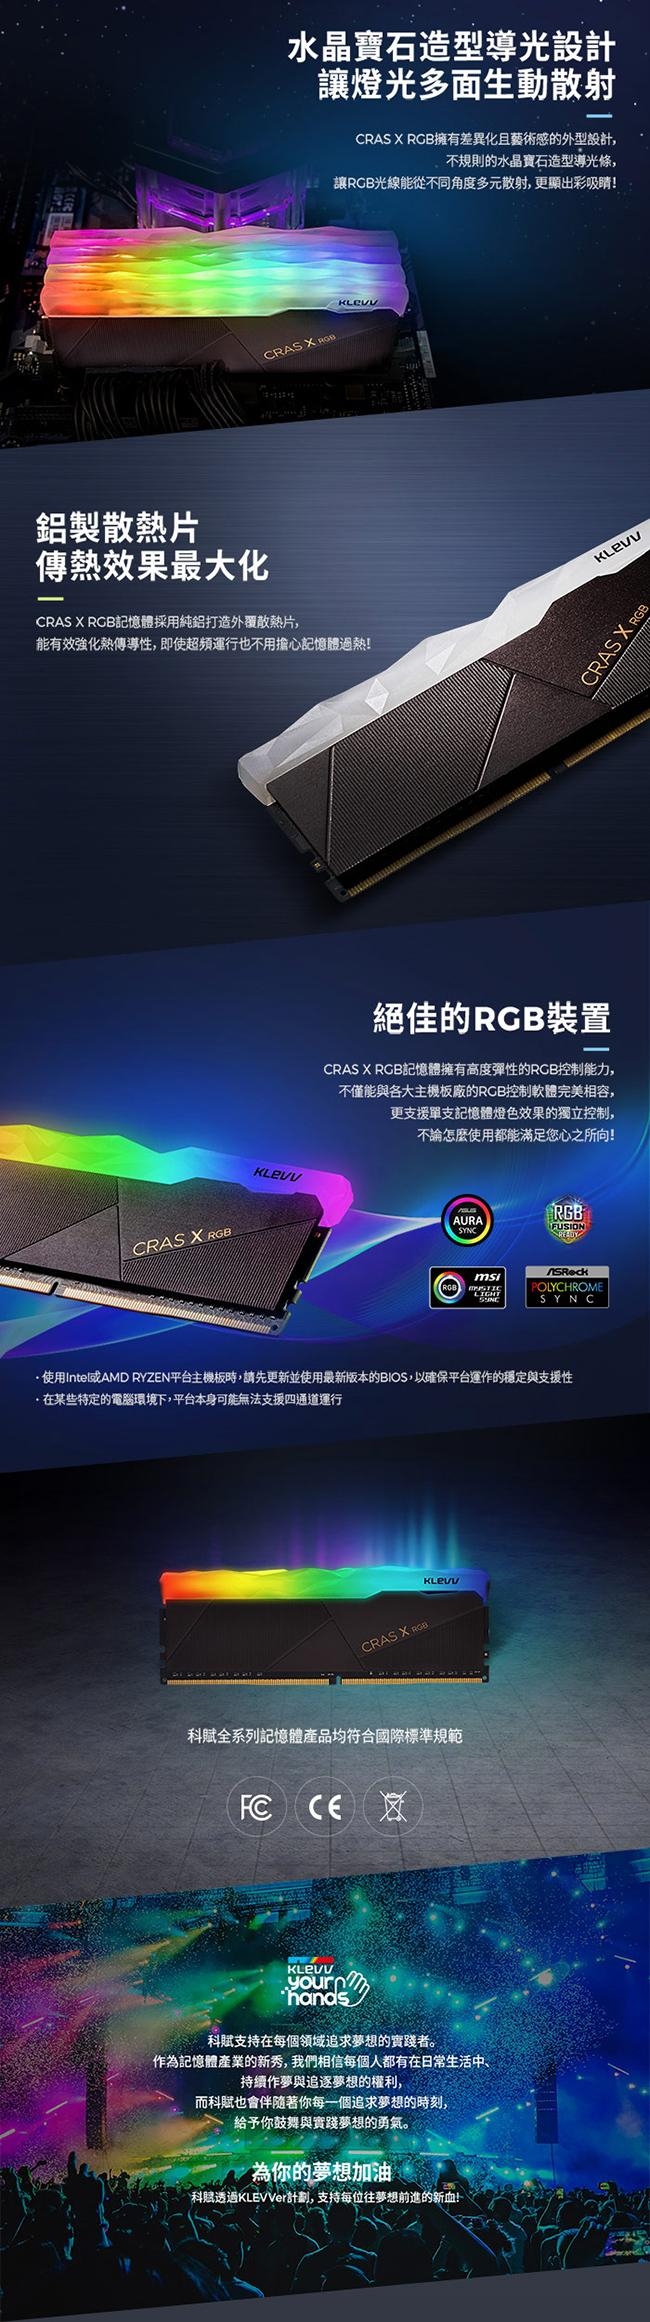 KLEVV科賦 CRAS X RGB DDR4 3466 16Gx2 桌上型電競超頻記憶體